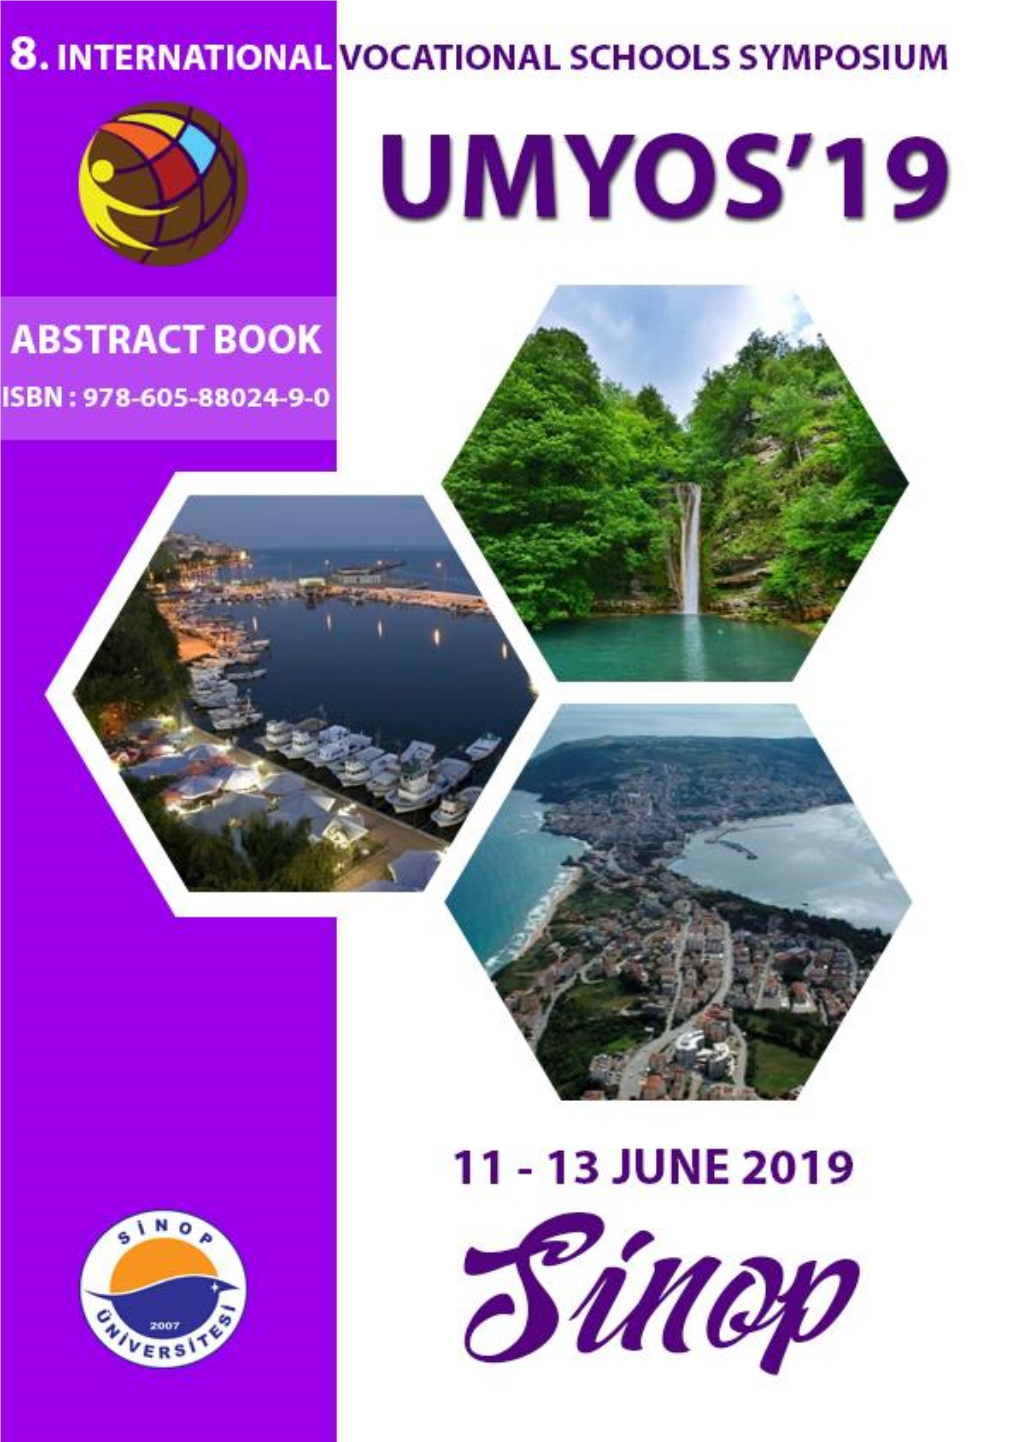 11-13 JUNE 2019 195 8Th International Vocational Schools Symposium UMYOS’19 SİNOP